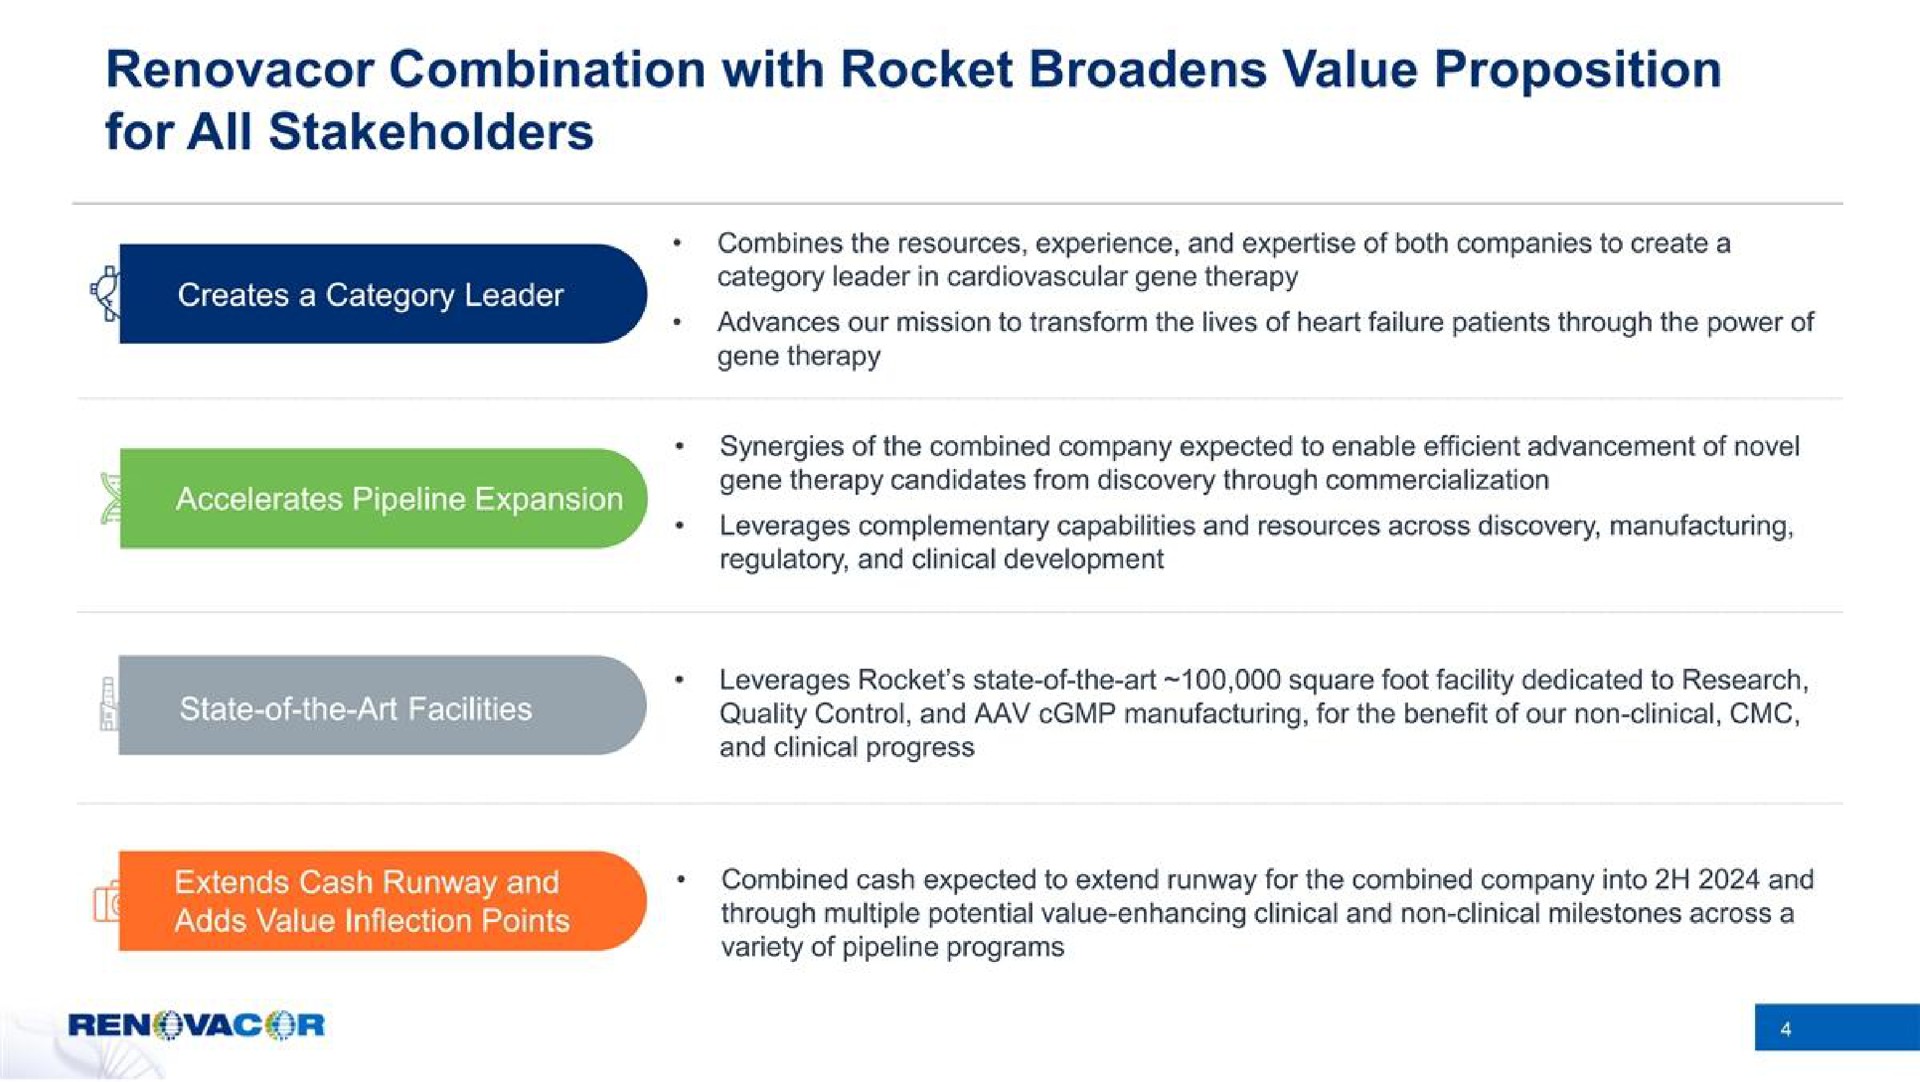 combination with rocket broadens value proposition | Renovacor